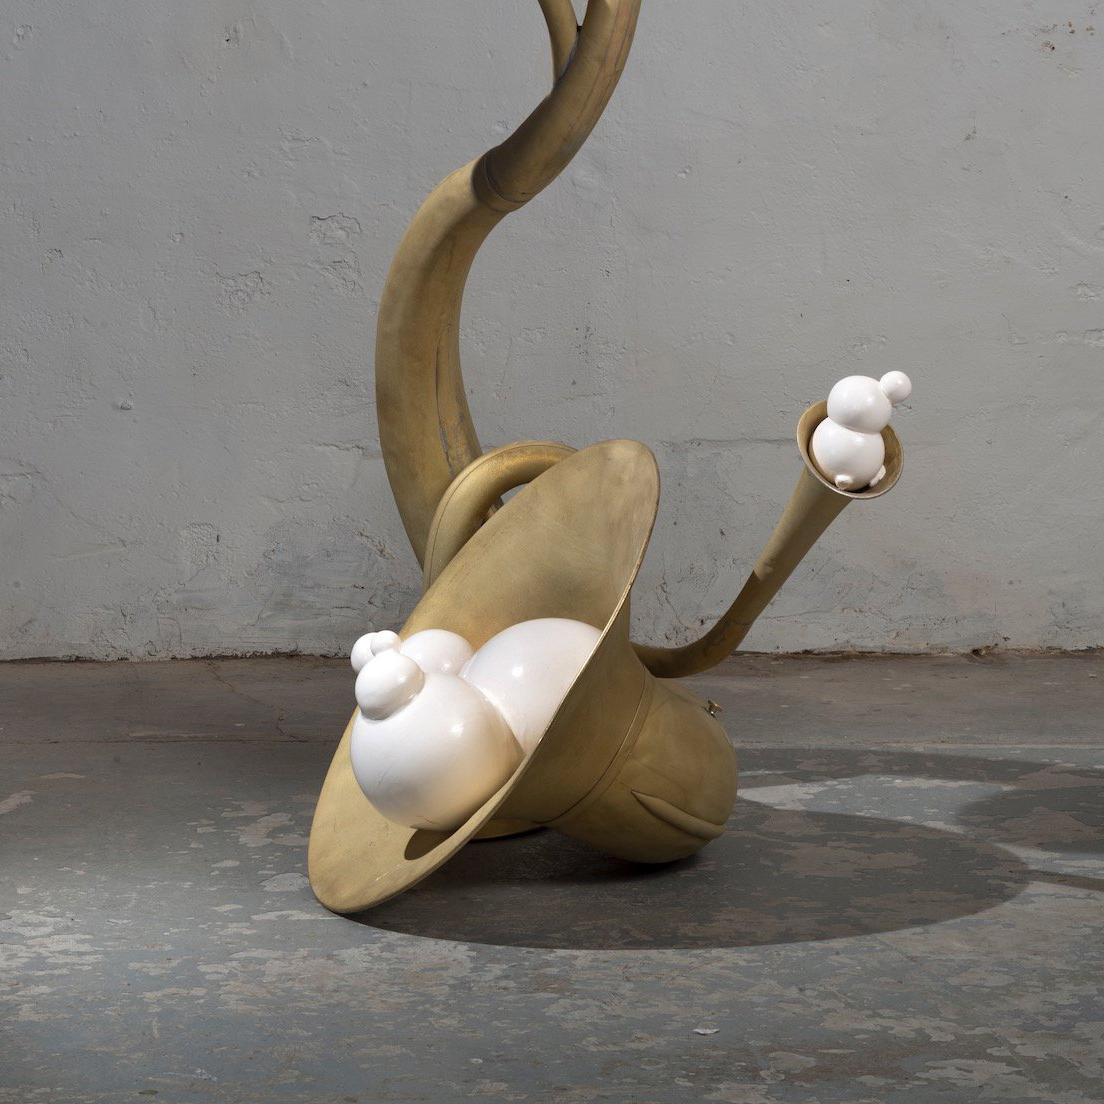 Mr. Green - Contemporary Sculpture by Linda Lighton